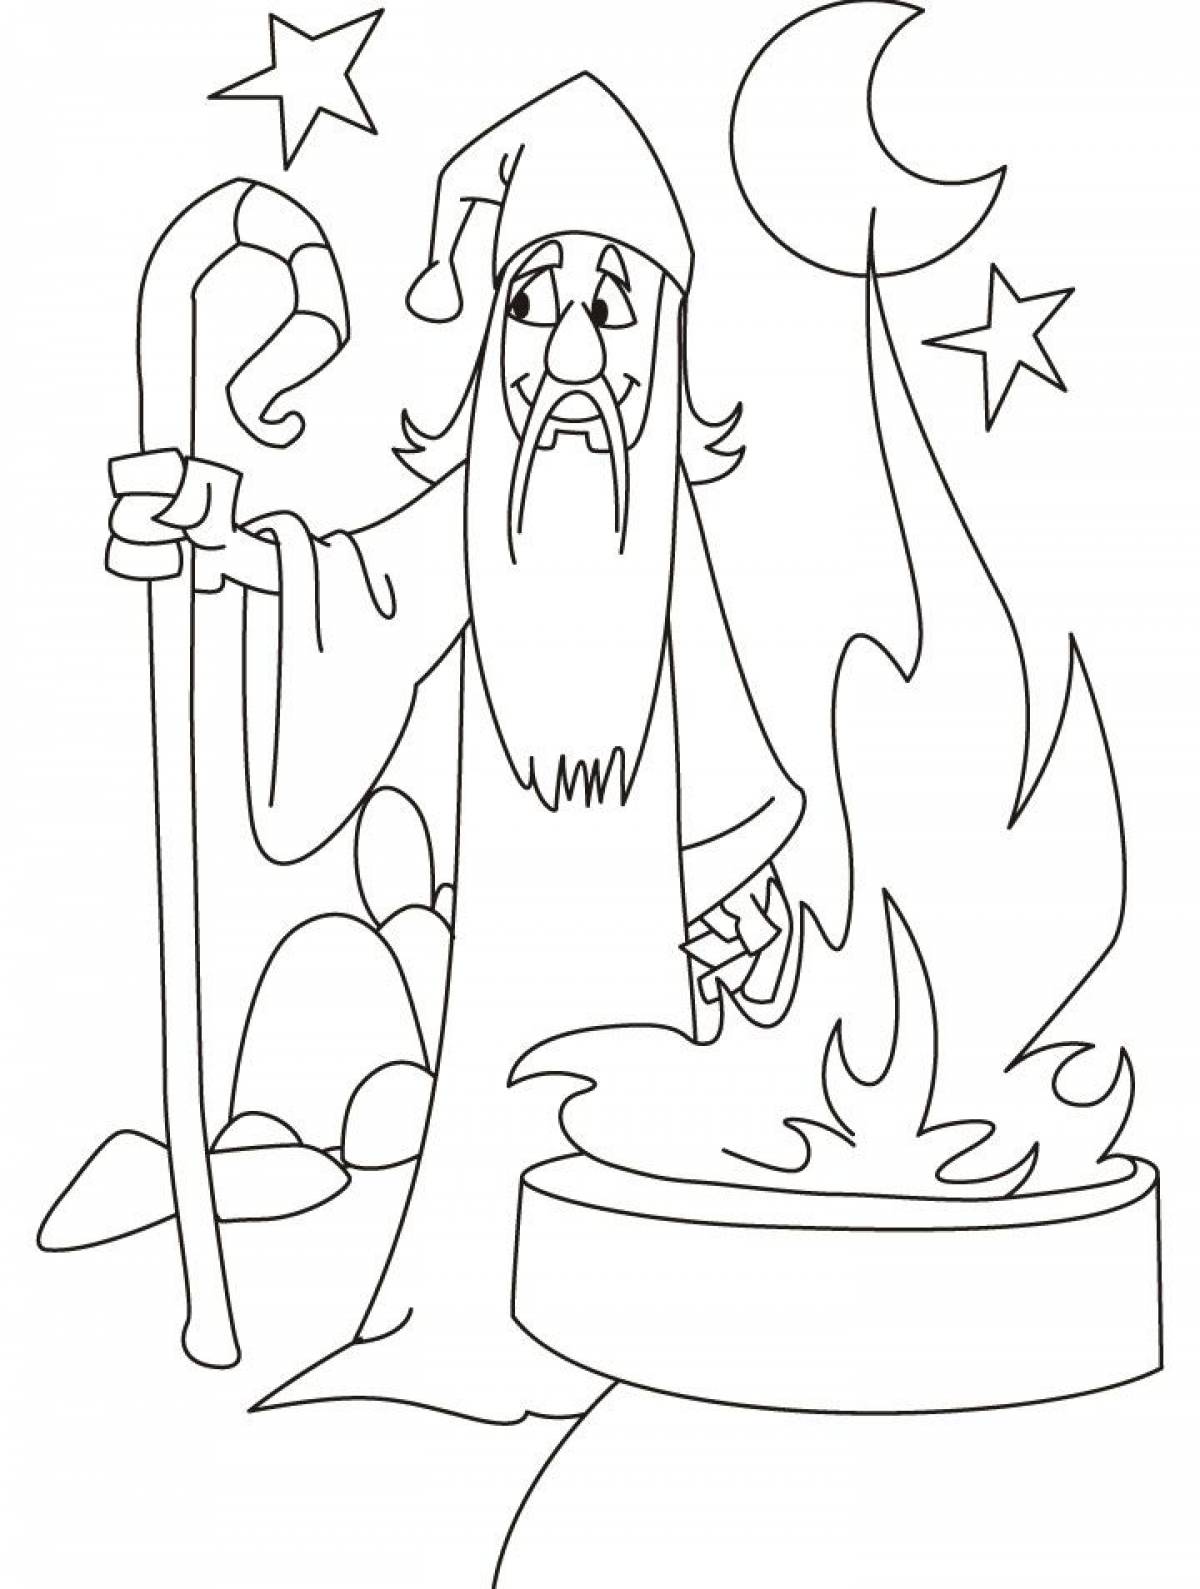 Wizard brews a potion